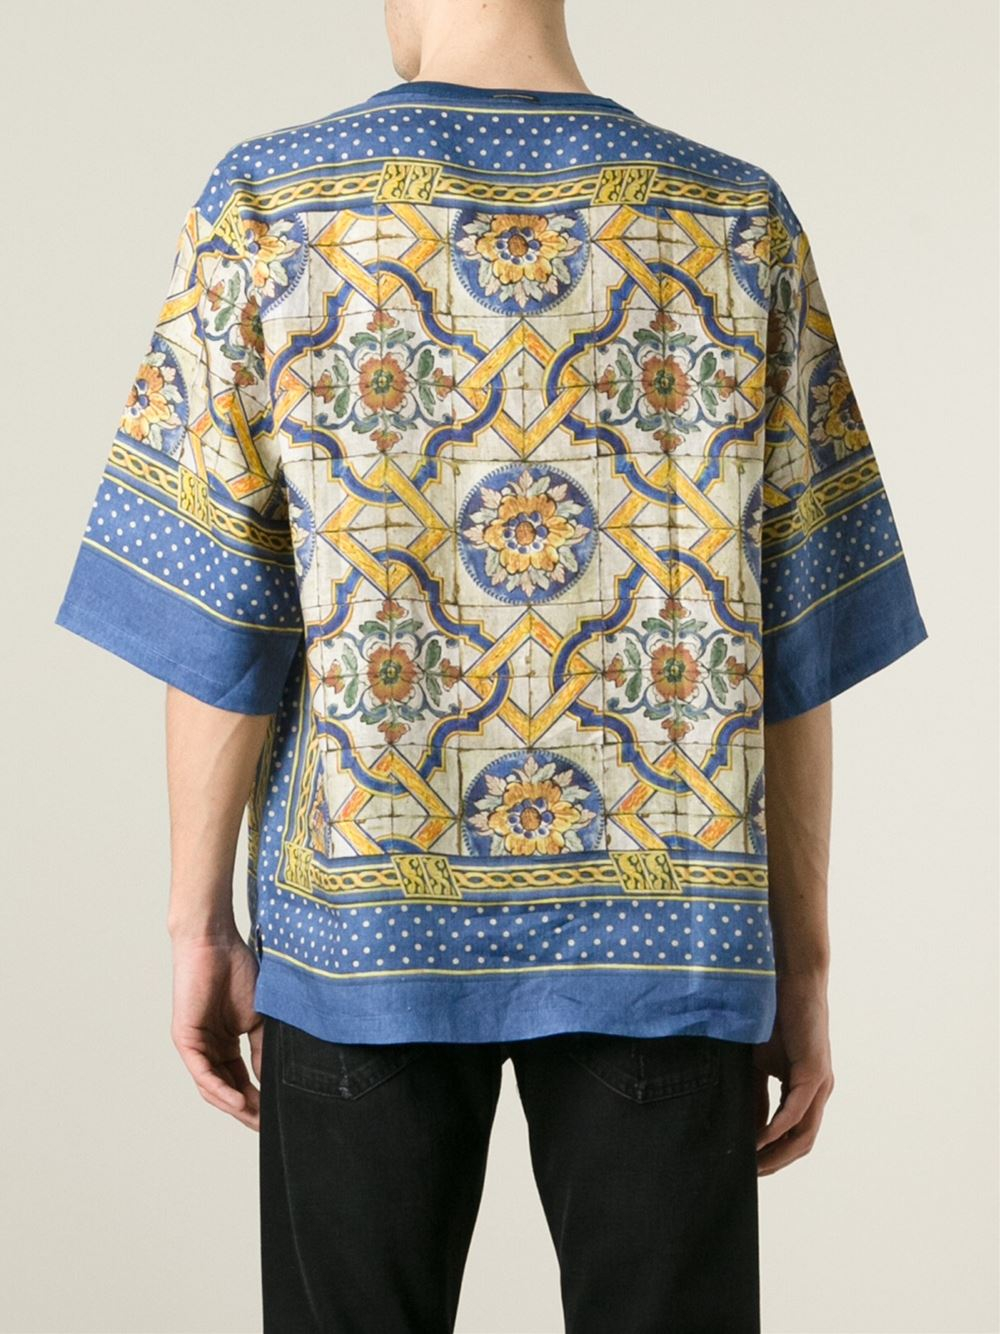 Dolce & Gabbana Majolica-Print T-Shirt in Blue for Men - Lyst